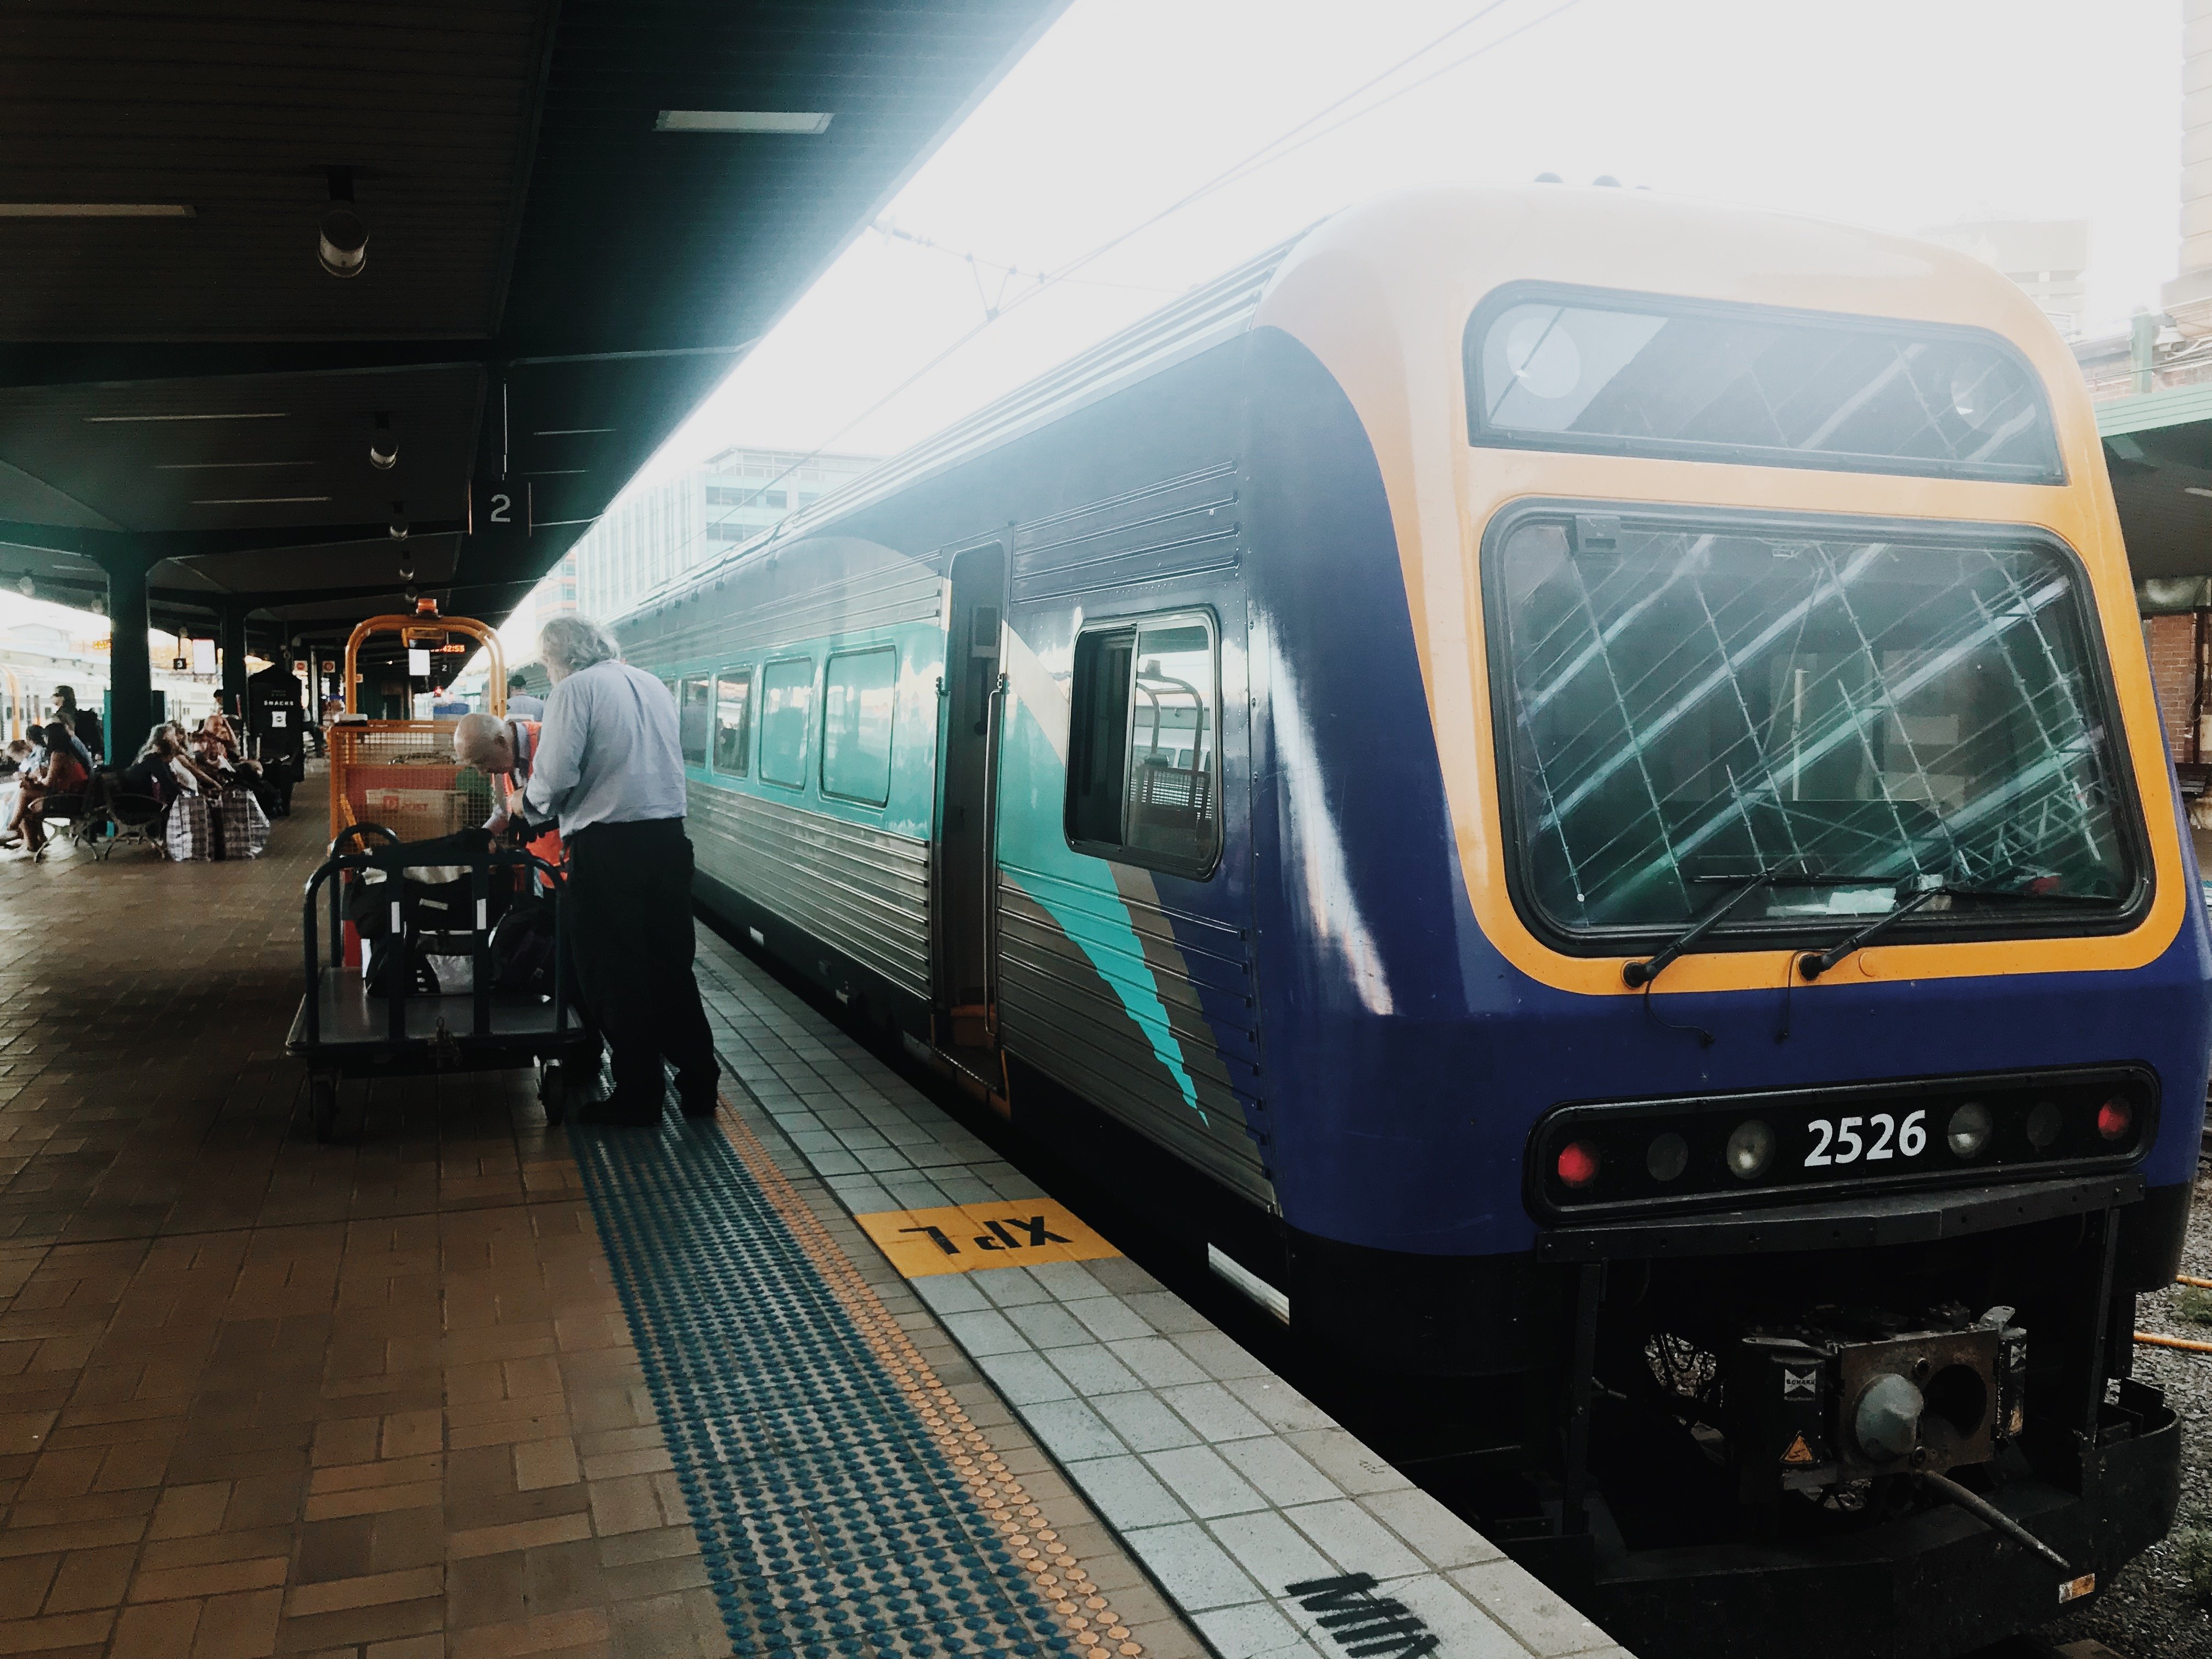 CAPAStudyAbroad_Sydney_Spring 2019_Kara Davis__Sydney trains are fast, efficient, and reliable